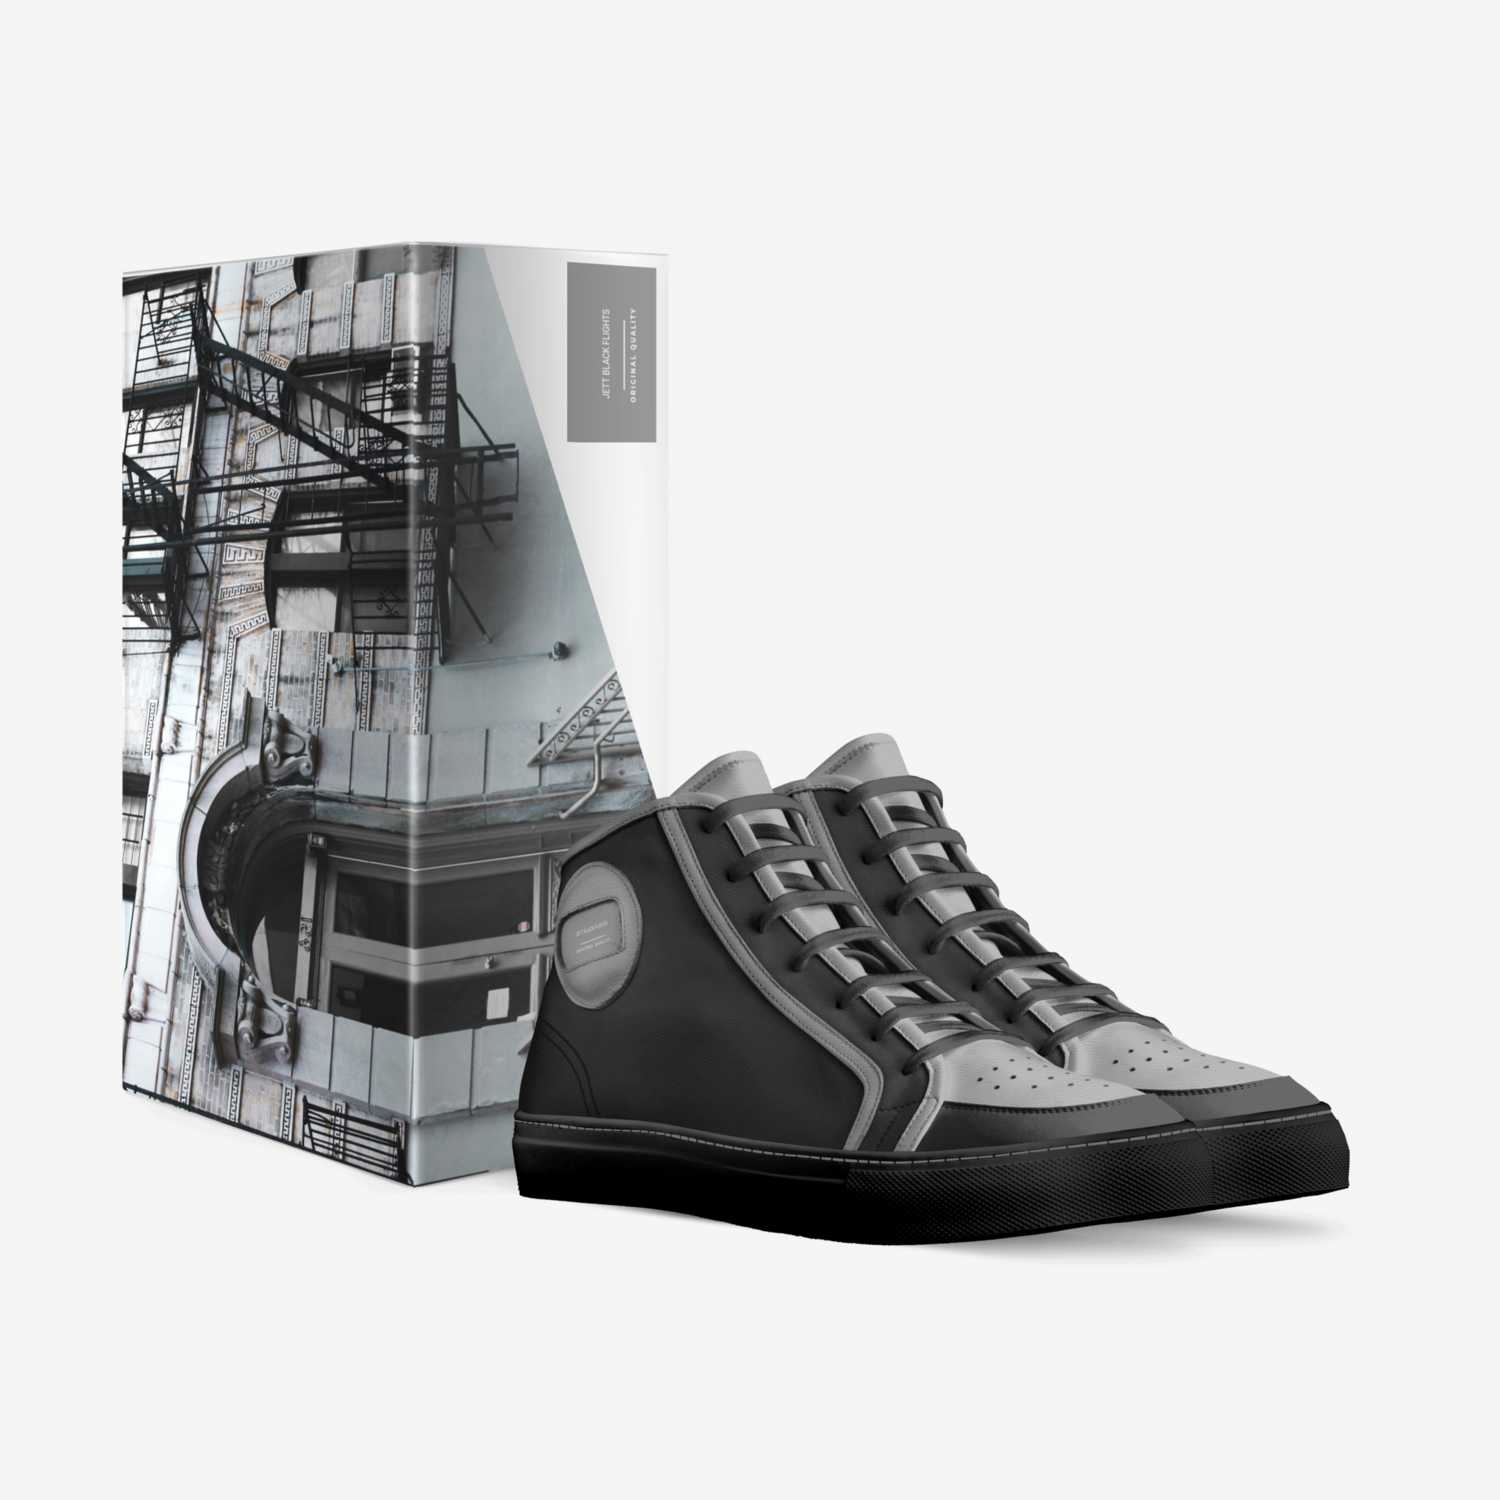 Jett Black Flights custom made in Italy shoes by Jett Black | Box view